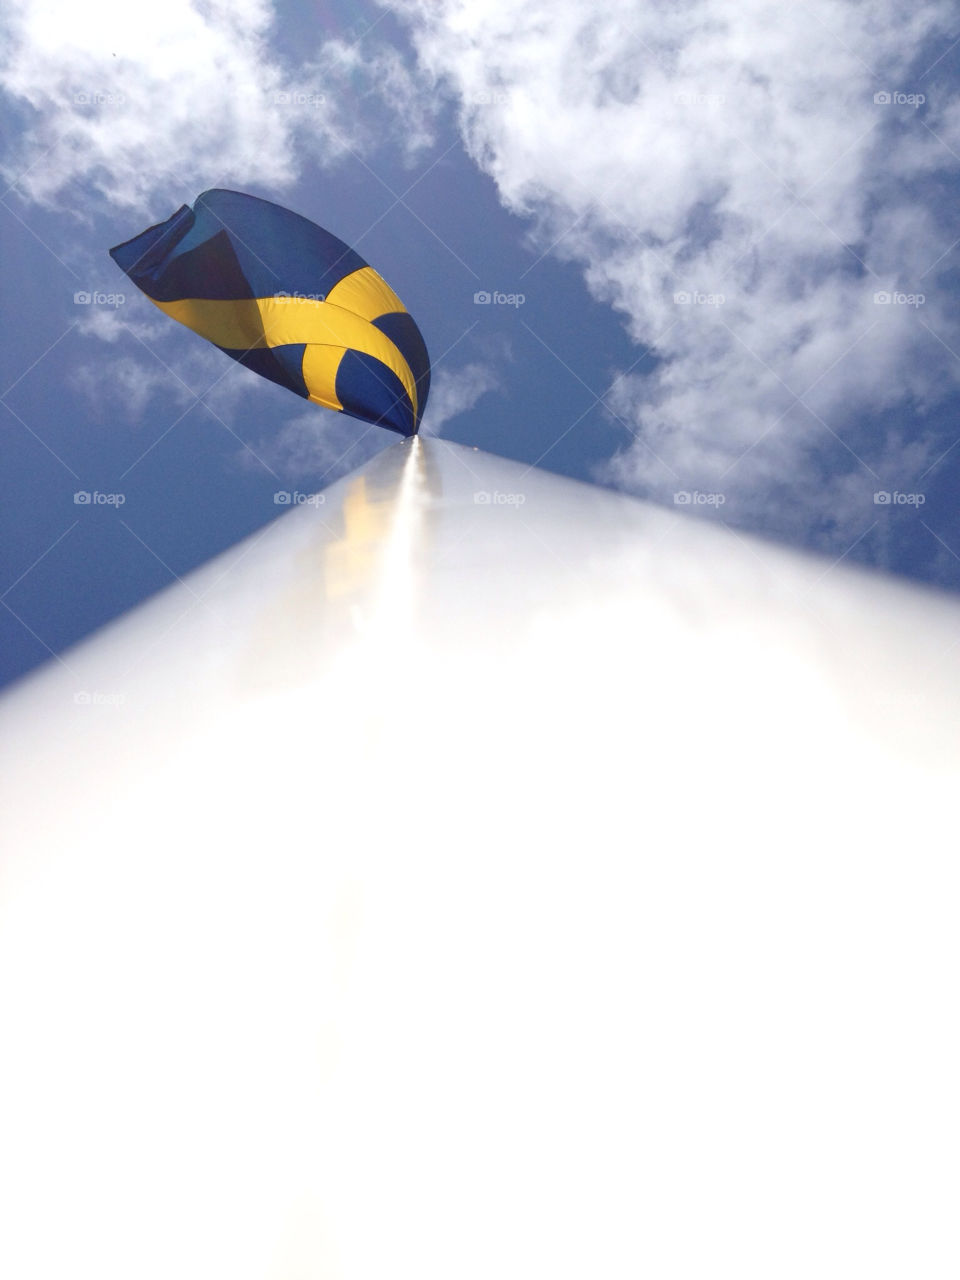 sky sweden flagpole celebrate by janfornhem